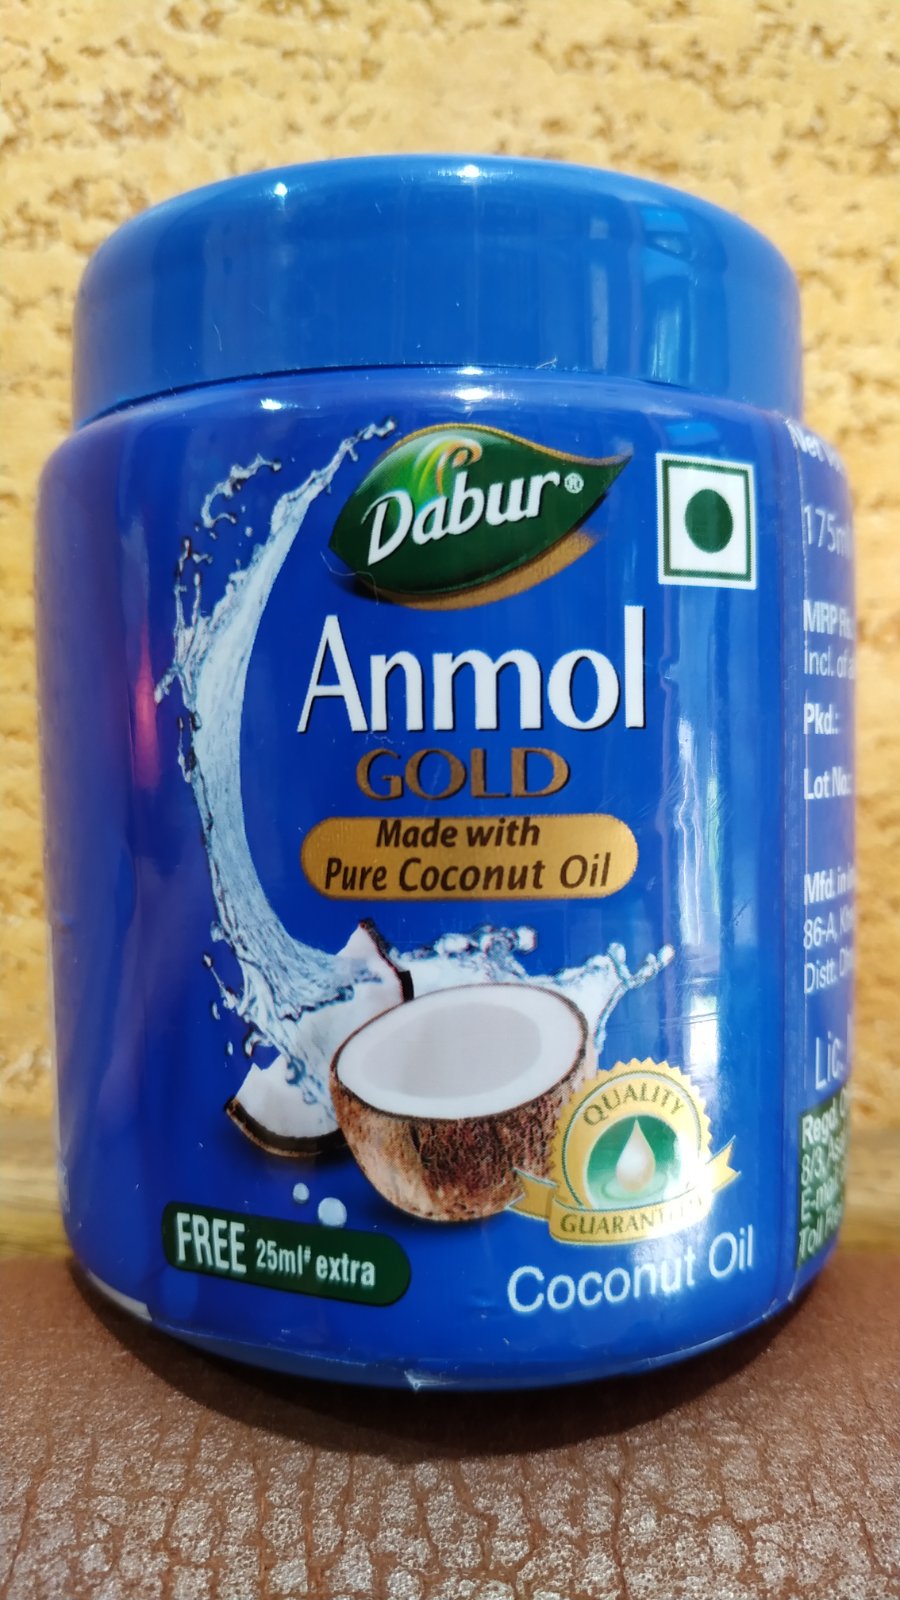 Coconut oil Кокосовое масло 100% Anmol Gold Dabur для волос, для кожи, для загара, для ногтей, 200 мл. Индия